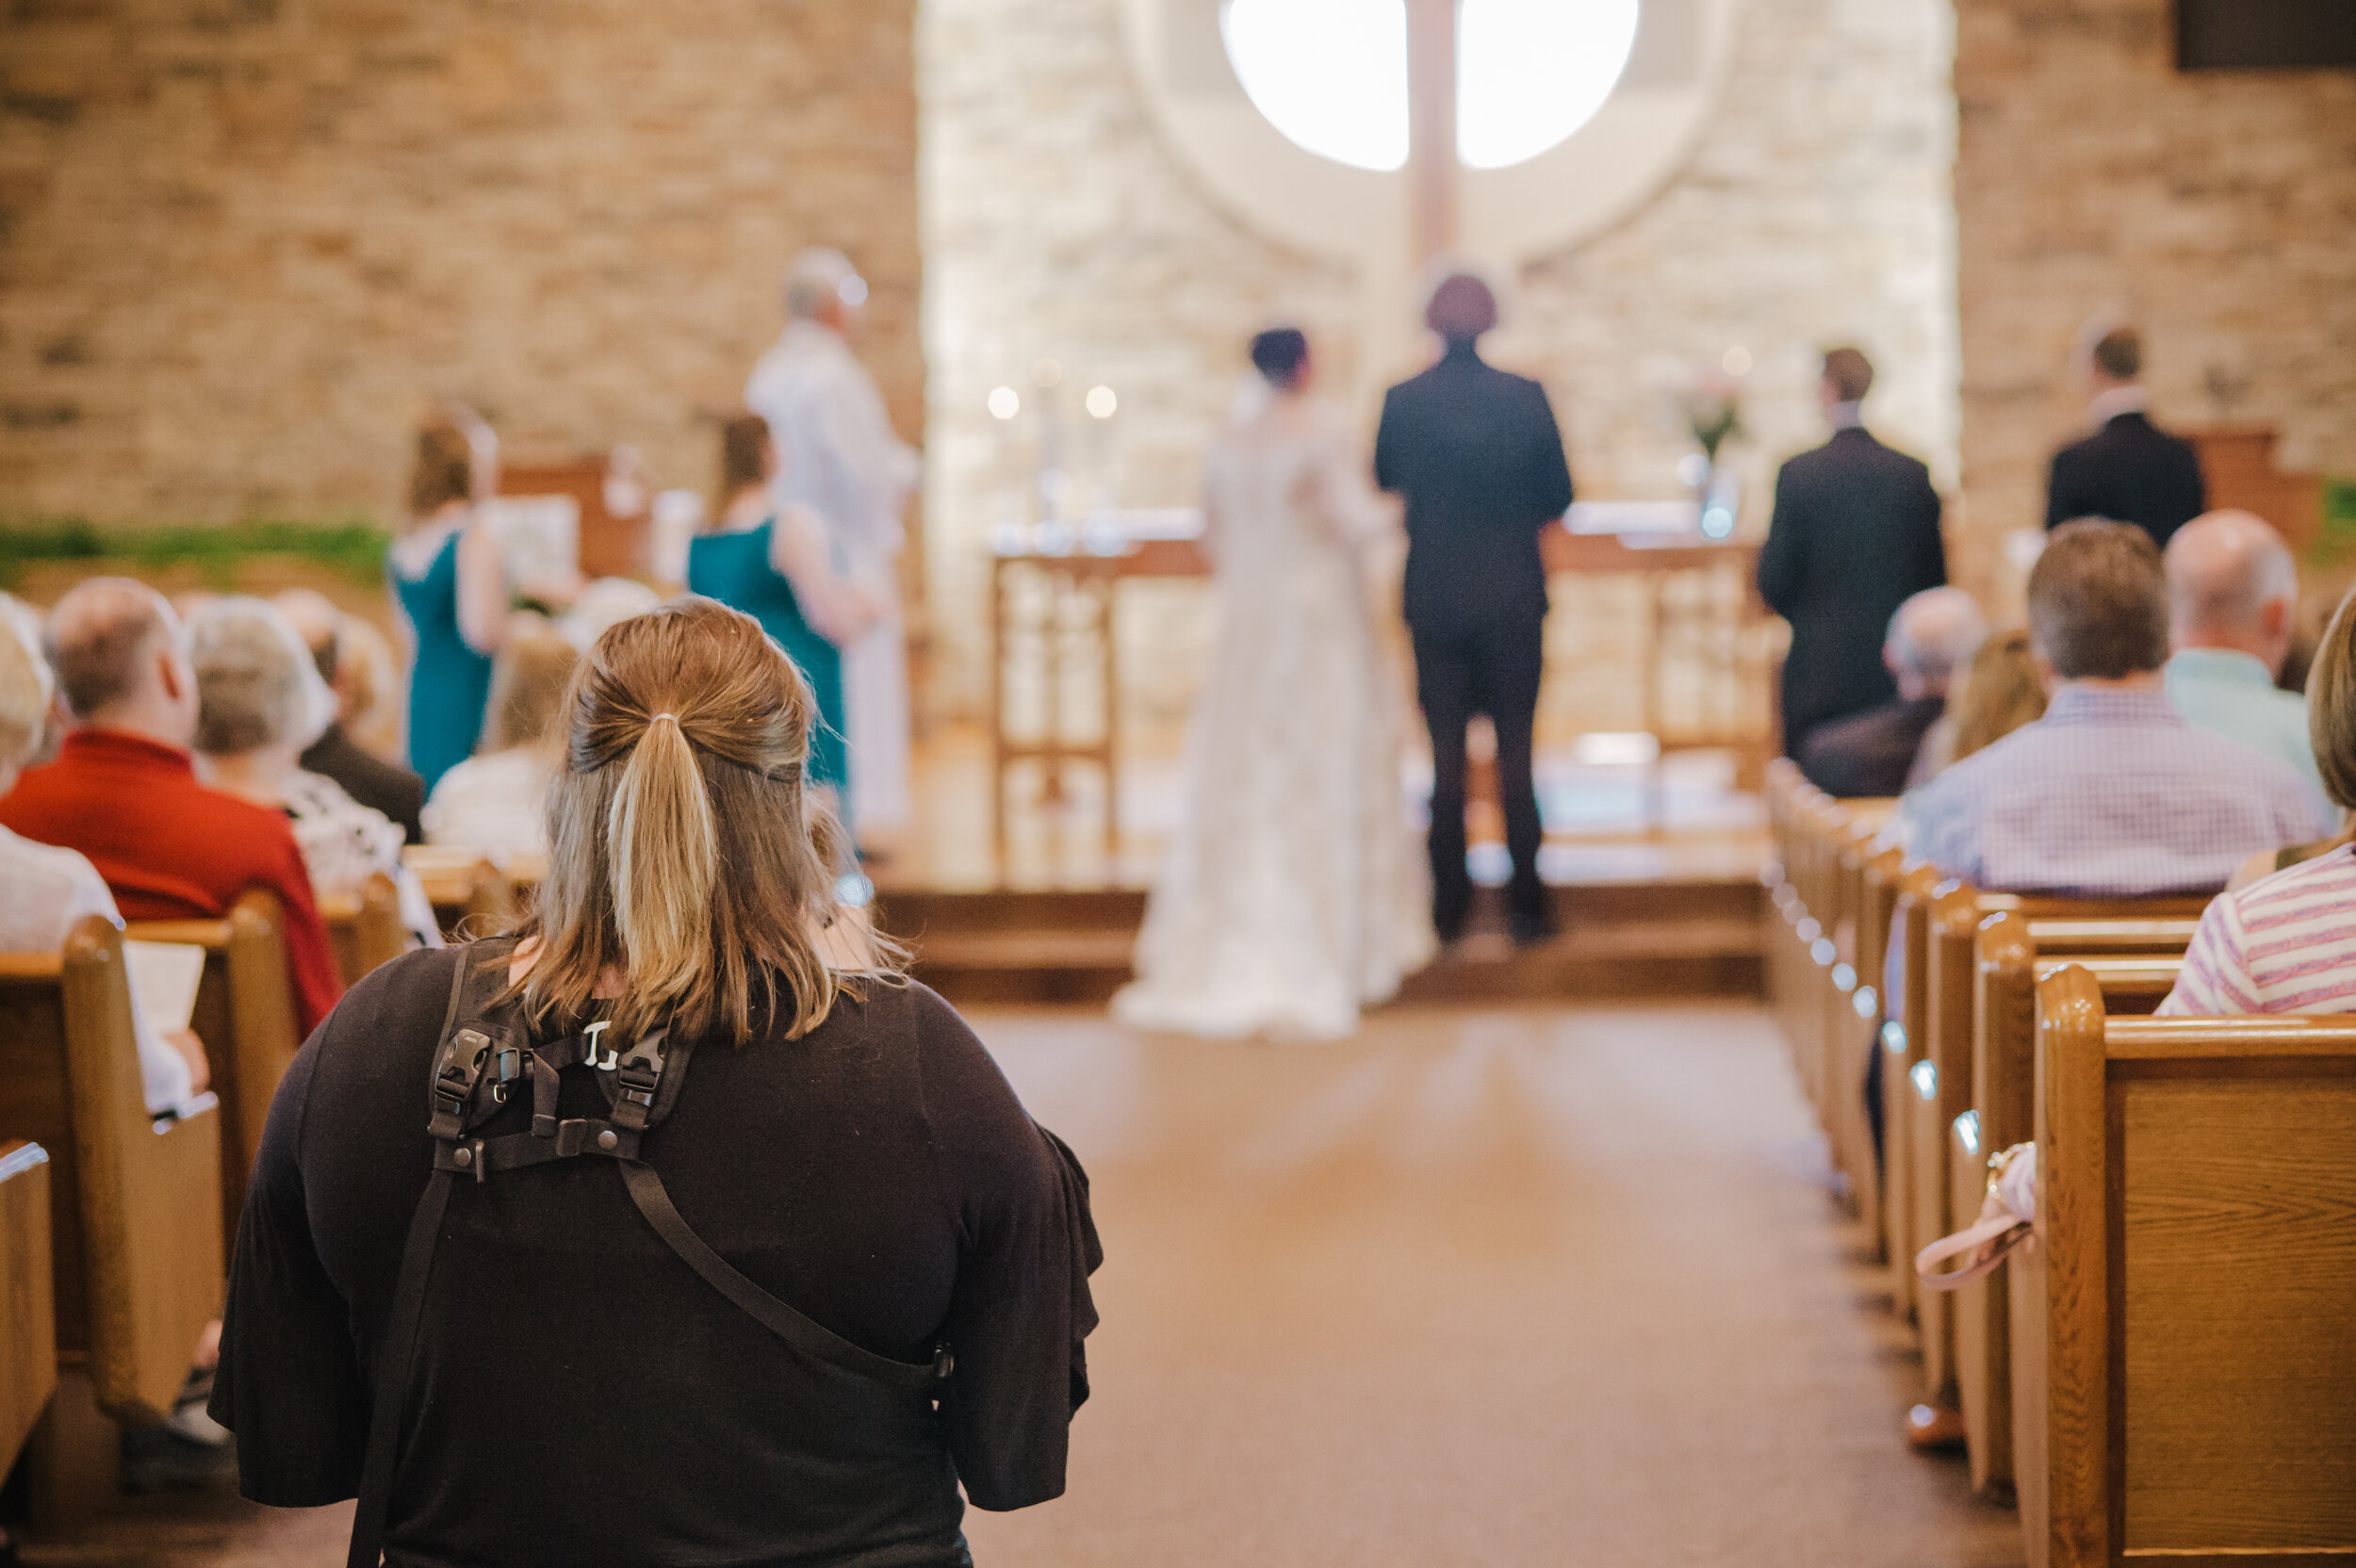 Photographer capturing indoor wedding ceremony in a church